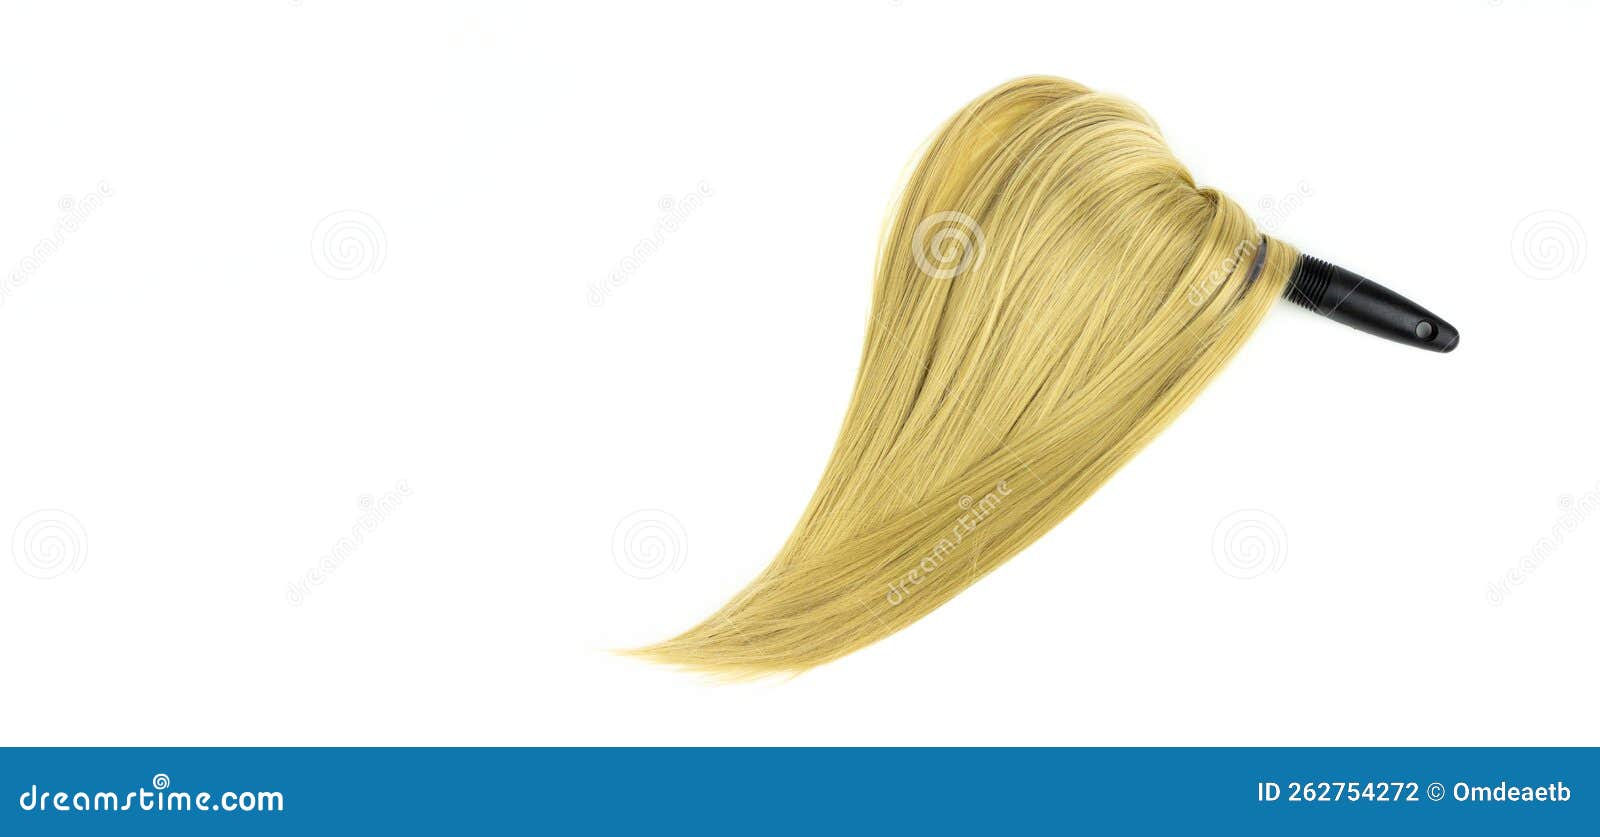 5. Fancy Long Blonde Hair Accessories - wide 1